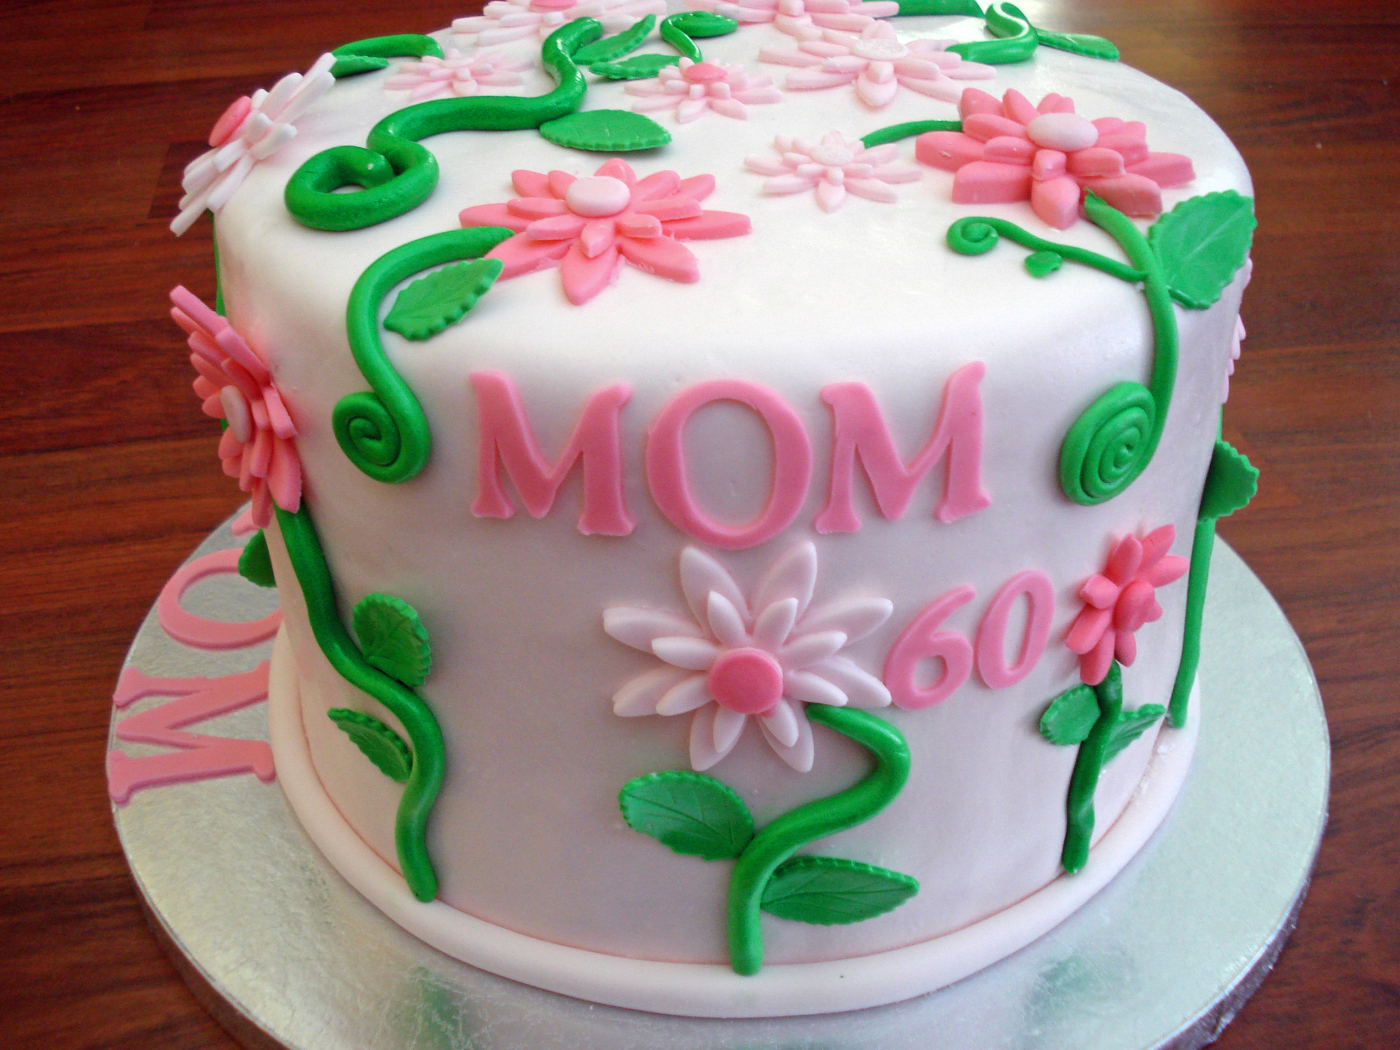 Mom's 60th birthday cake, Cake Decorating Community. helpful non helpf...